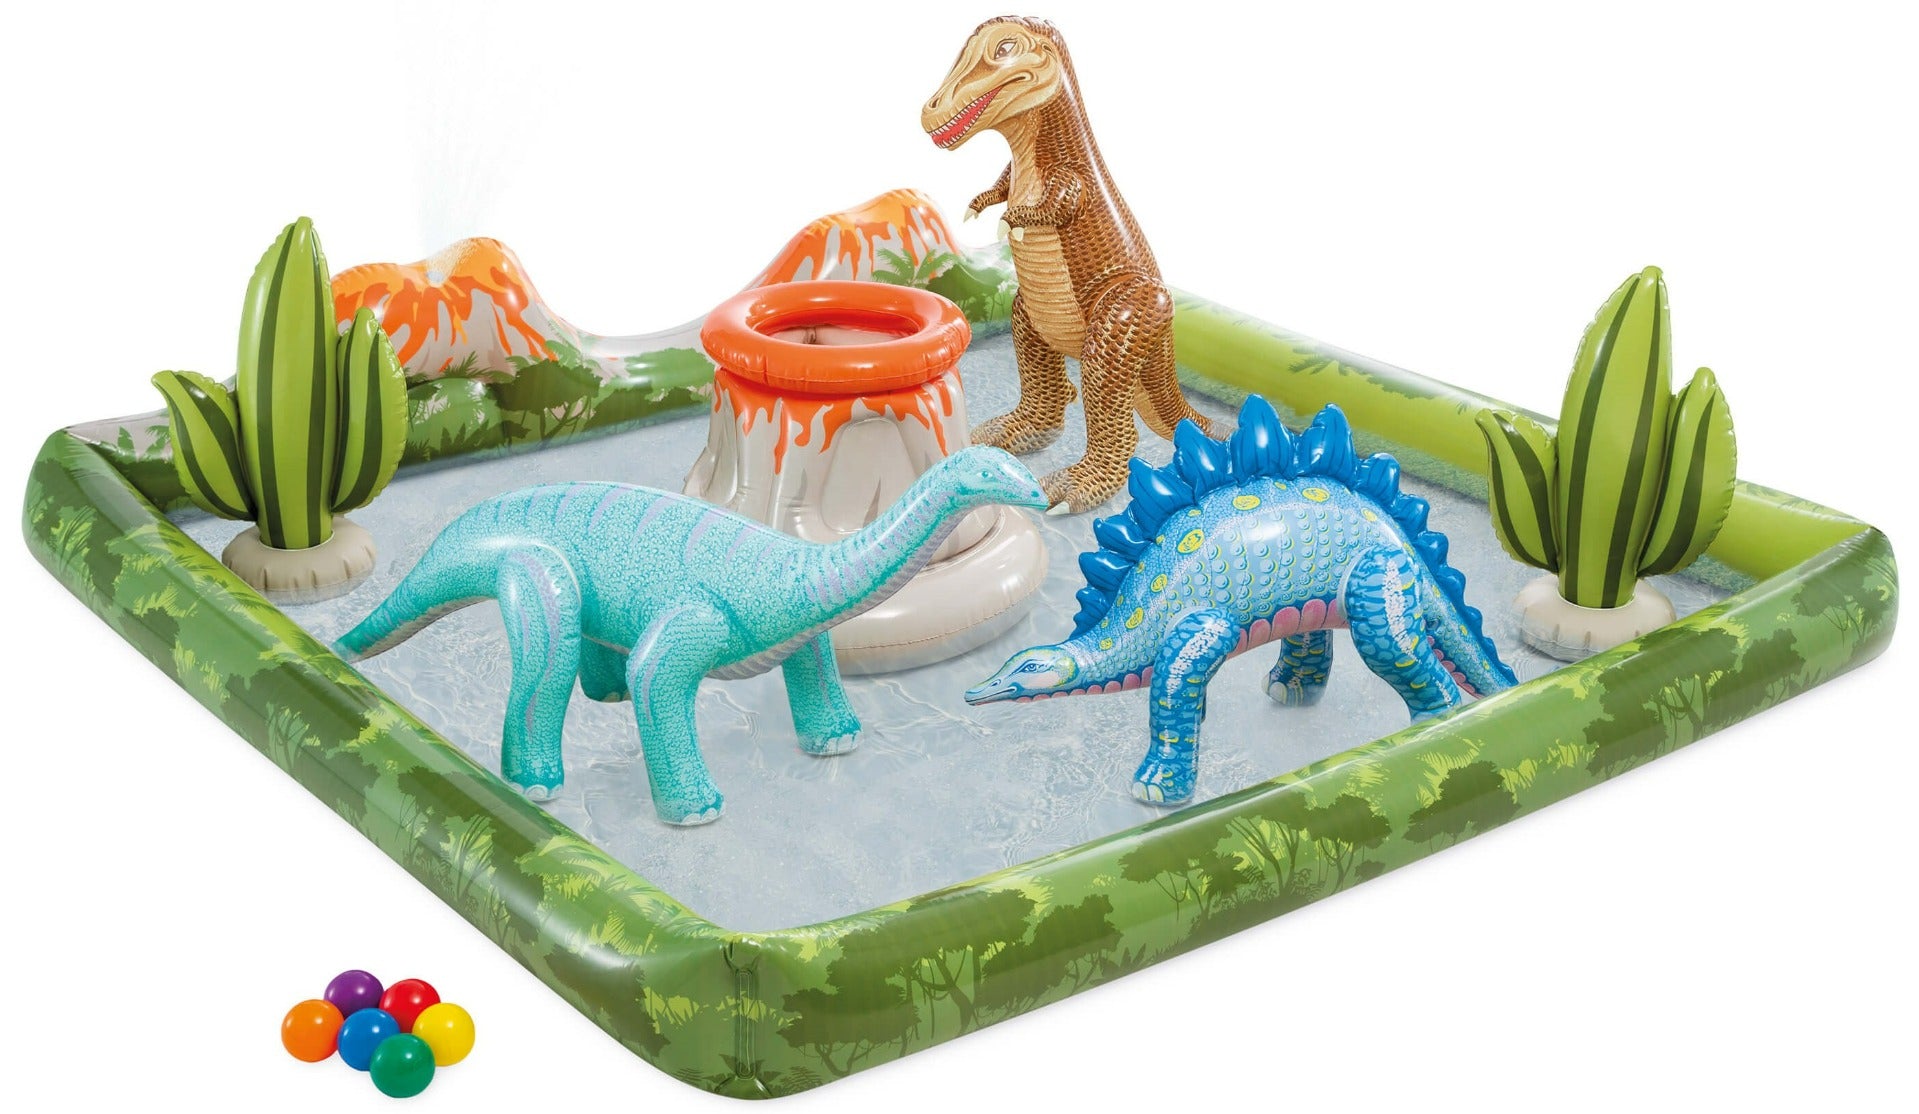 57132NP Play center Jurassic Adventure dinosauri - Intex